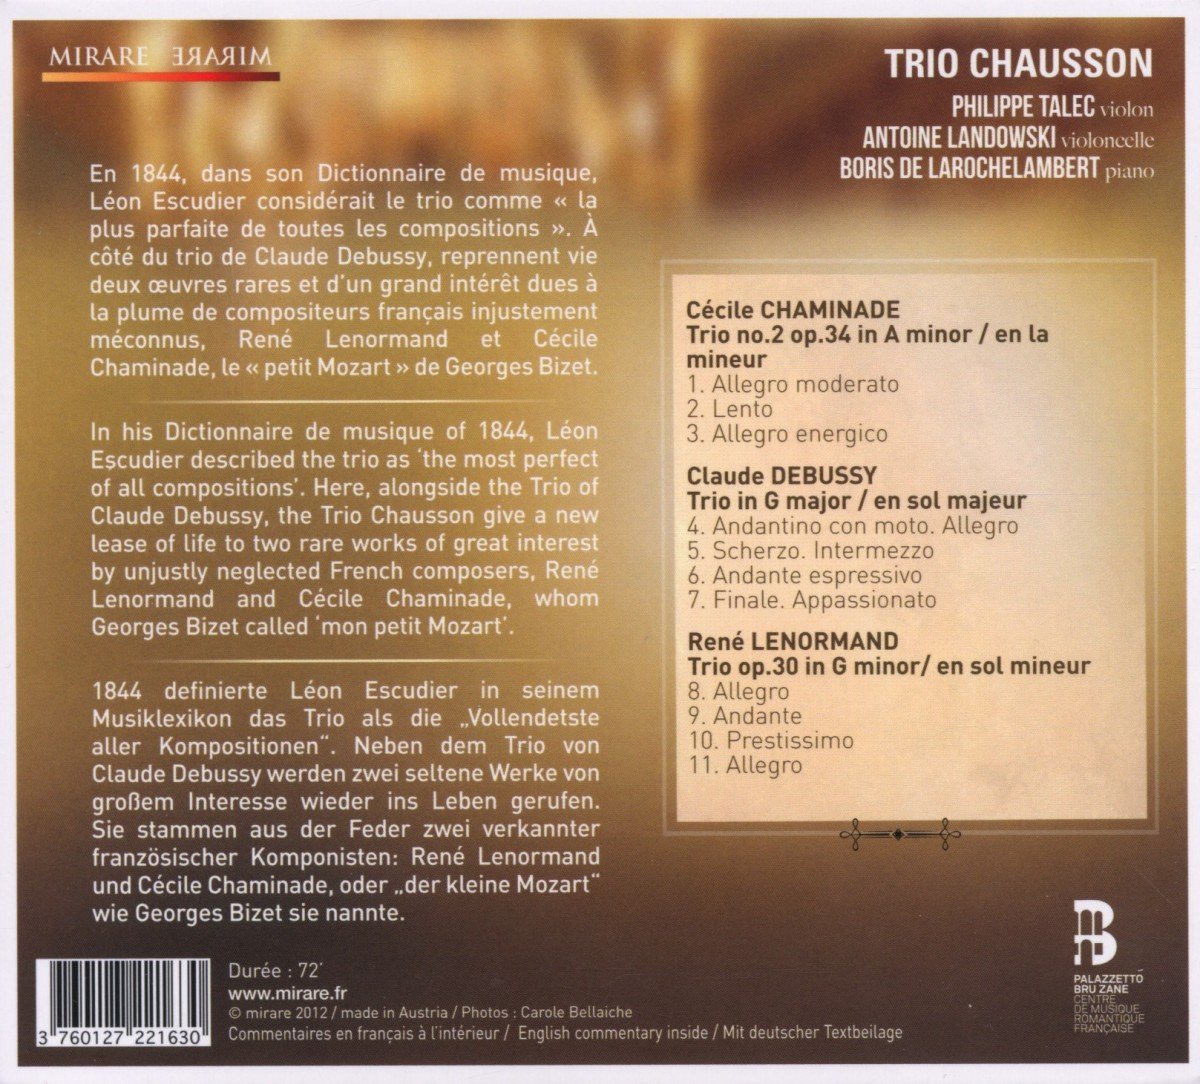 Trio Chausson 샤미나드 / 드뷔시 / 르노르만: 피아노 트리오 (Chaminade / Debussy / Lenormand: Piano Trios)